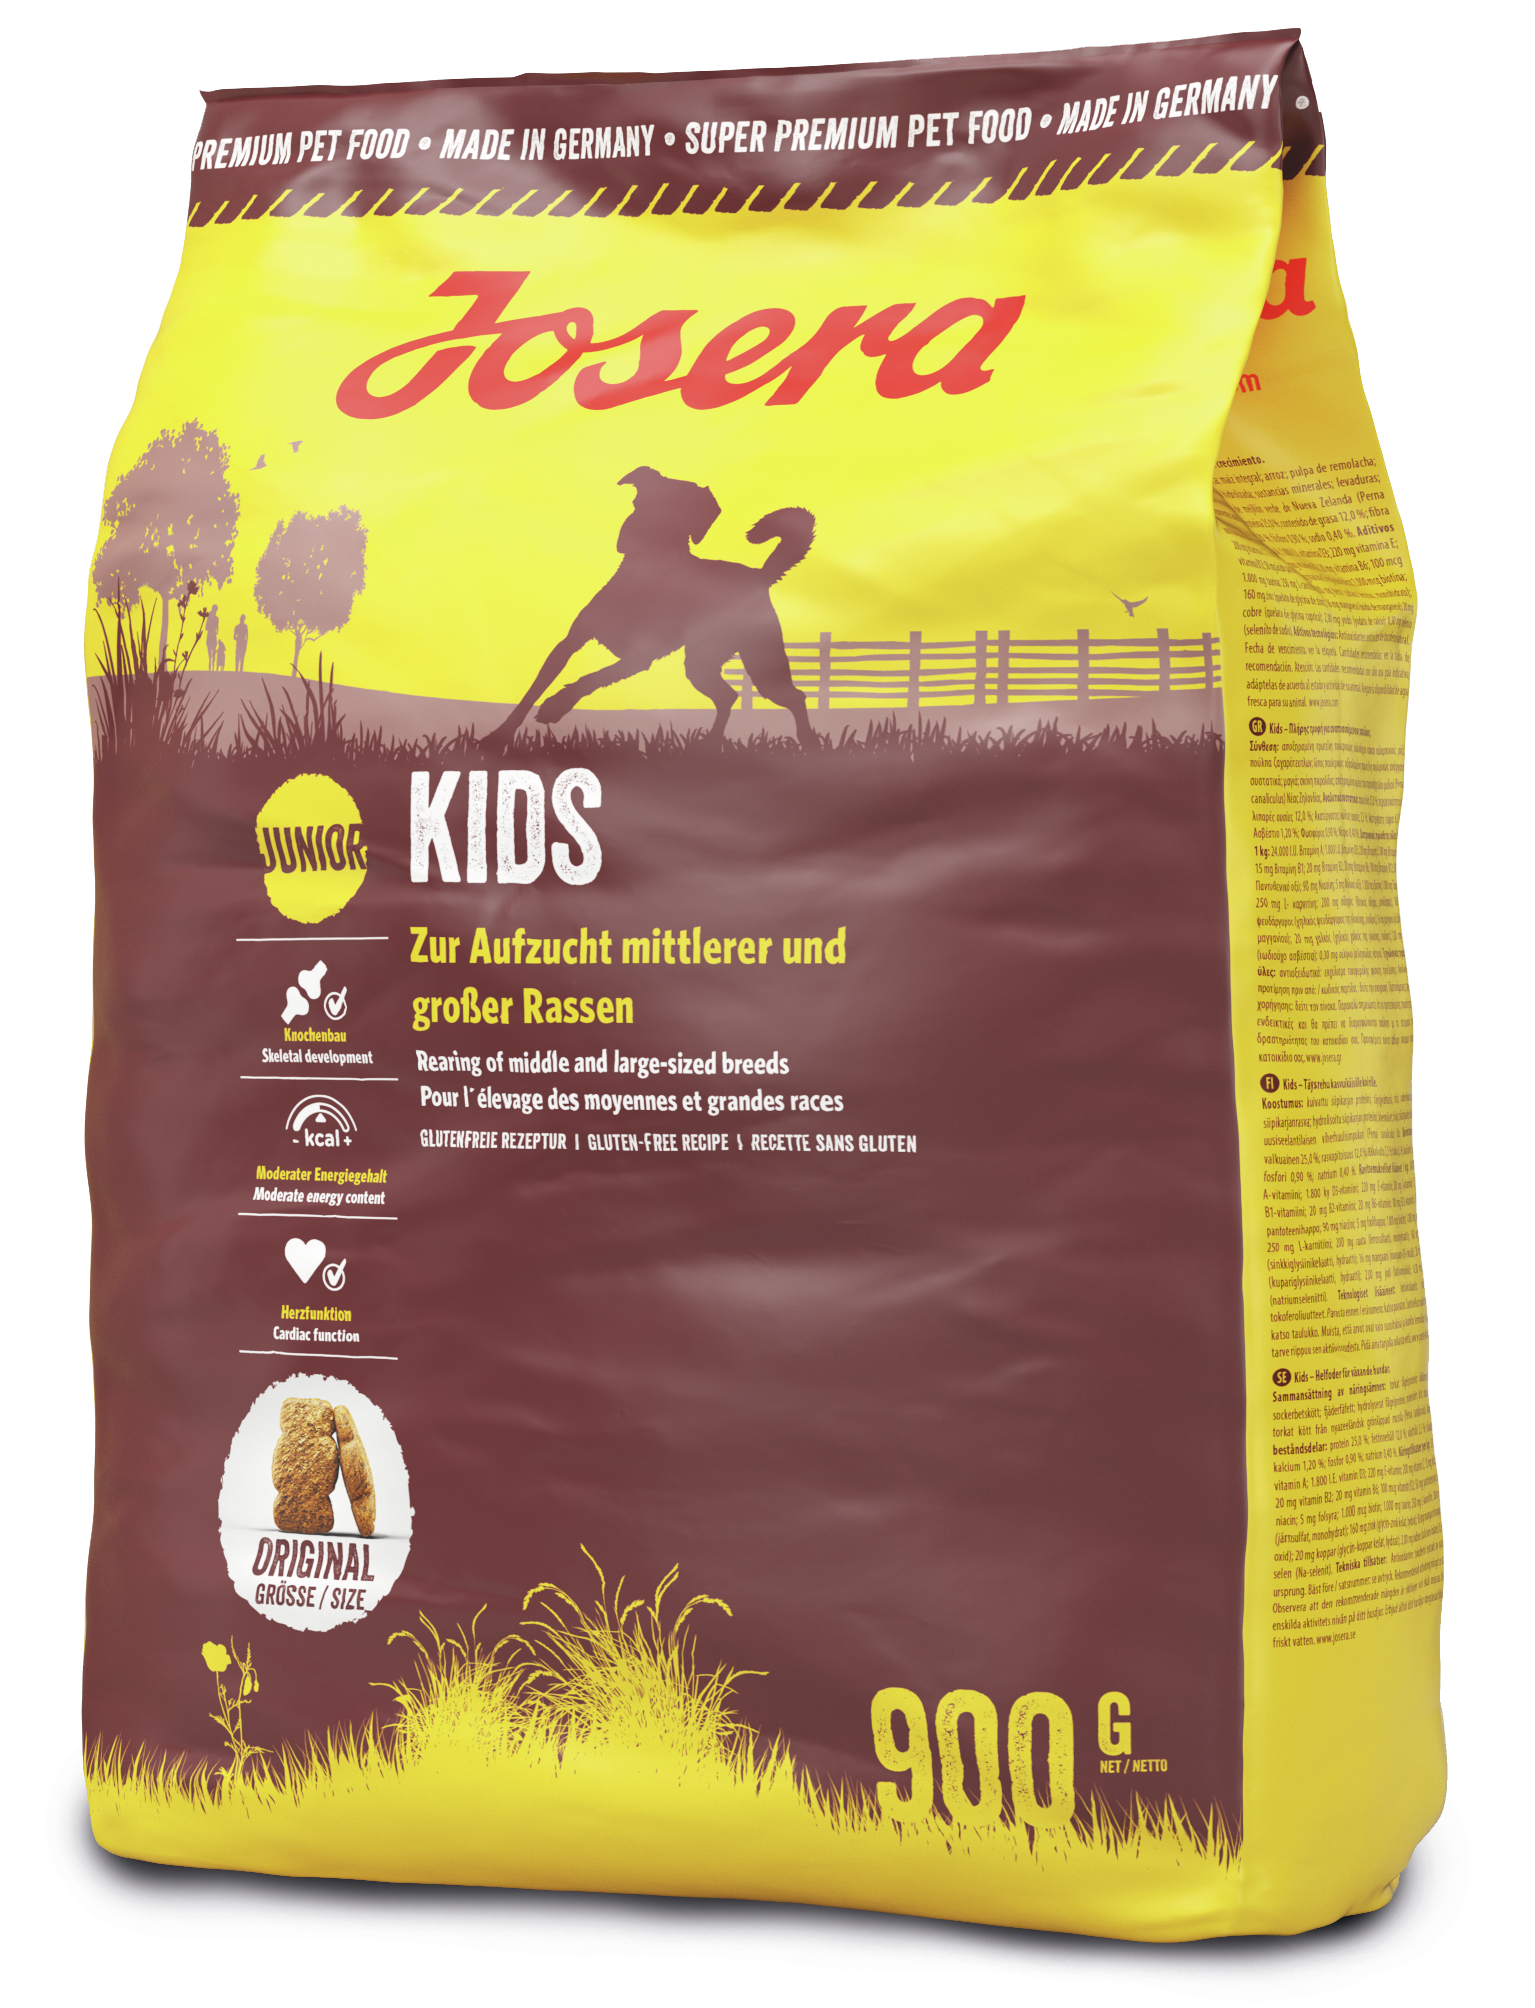 GRUNER Josera Kids 900g Hundefutter Super Premium - KEINE DISPO